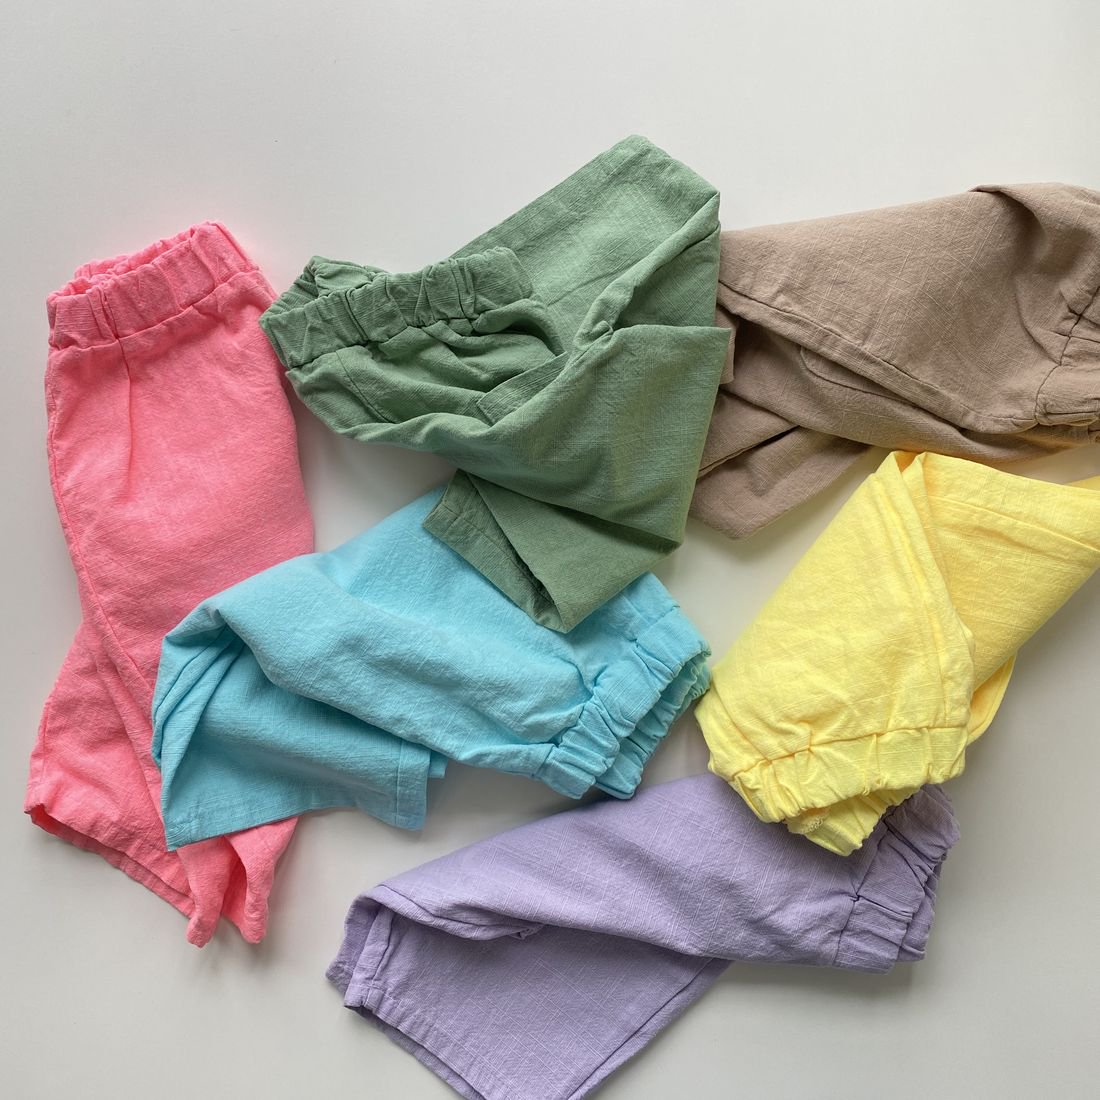 PAUBOLI Baby Long Bloomers Soft Cotton Harem Pants for Boys Girls 12M-6T 